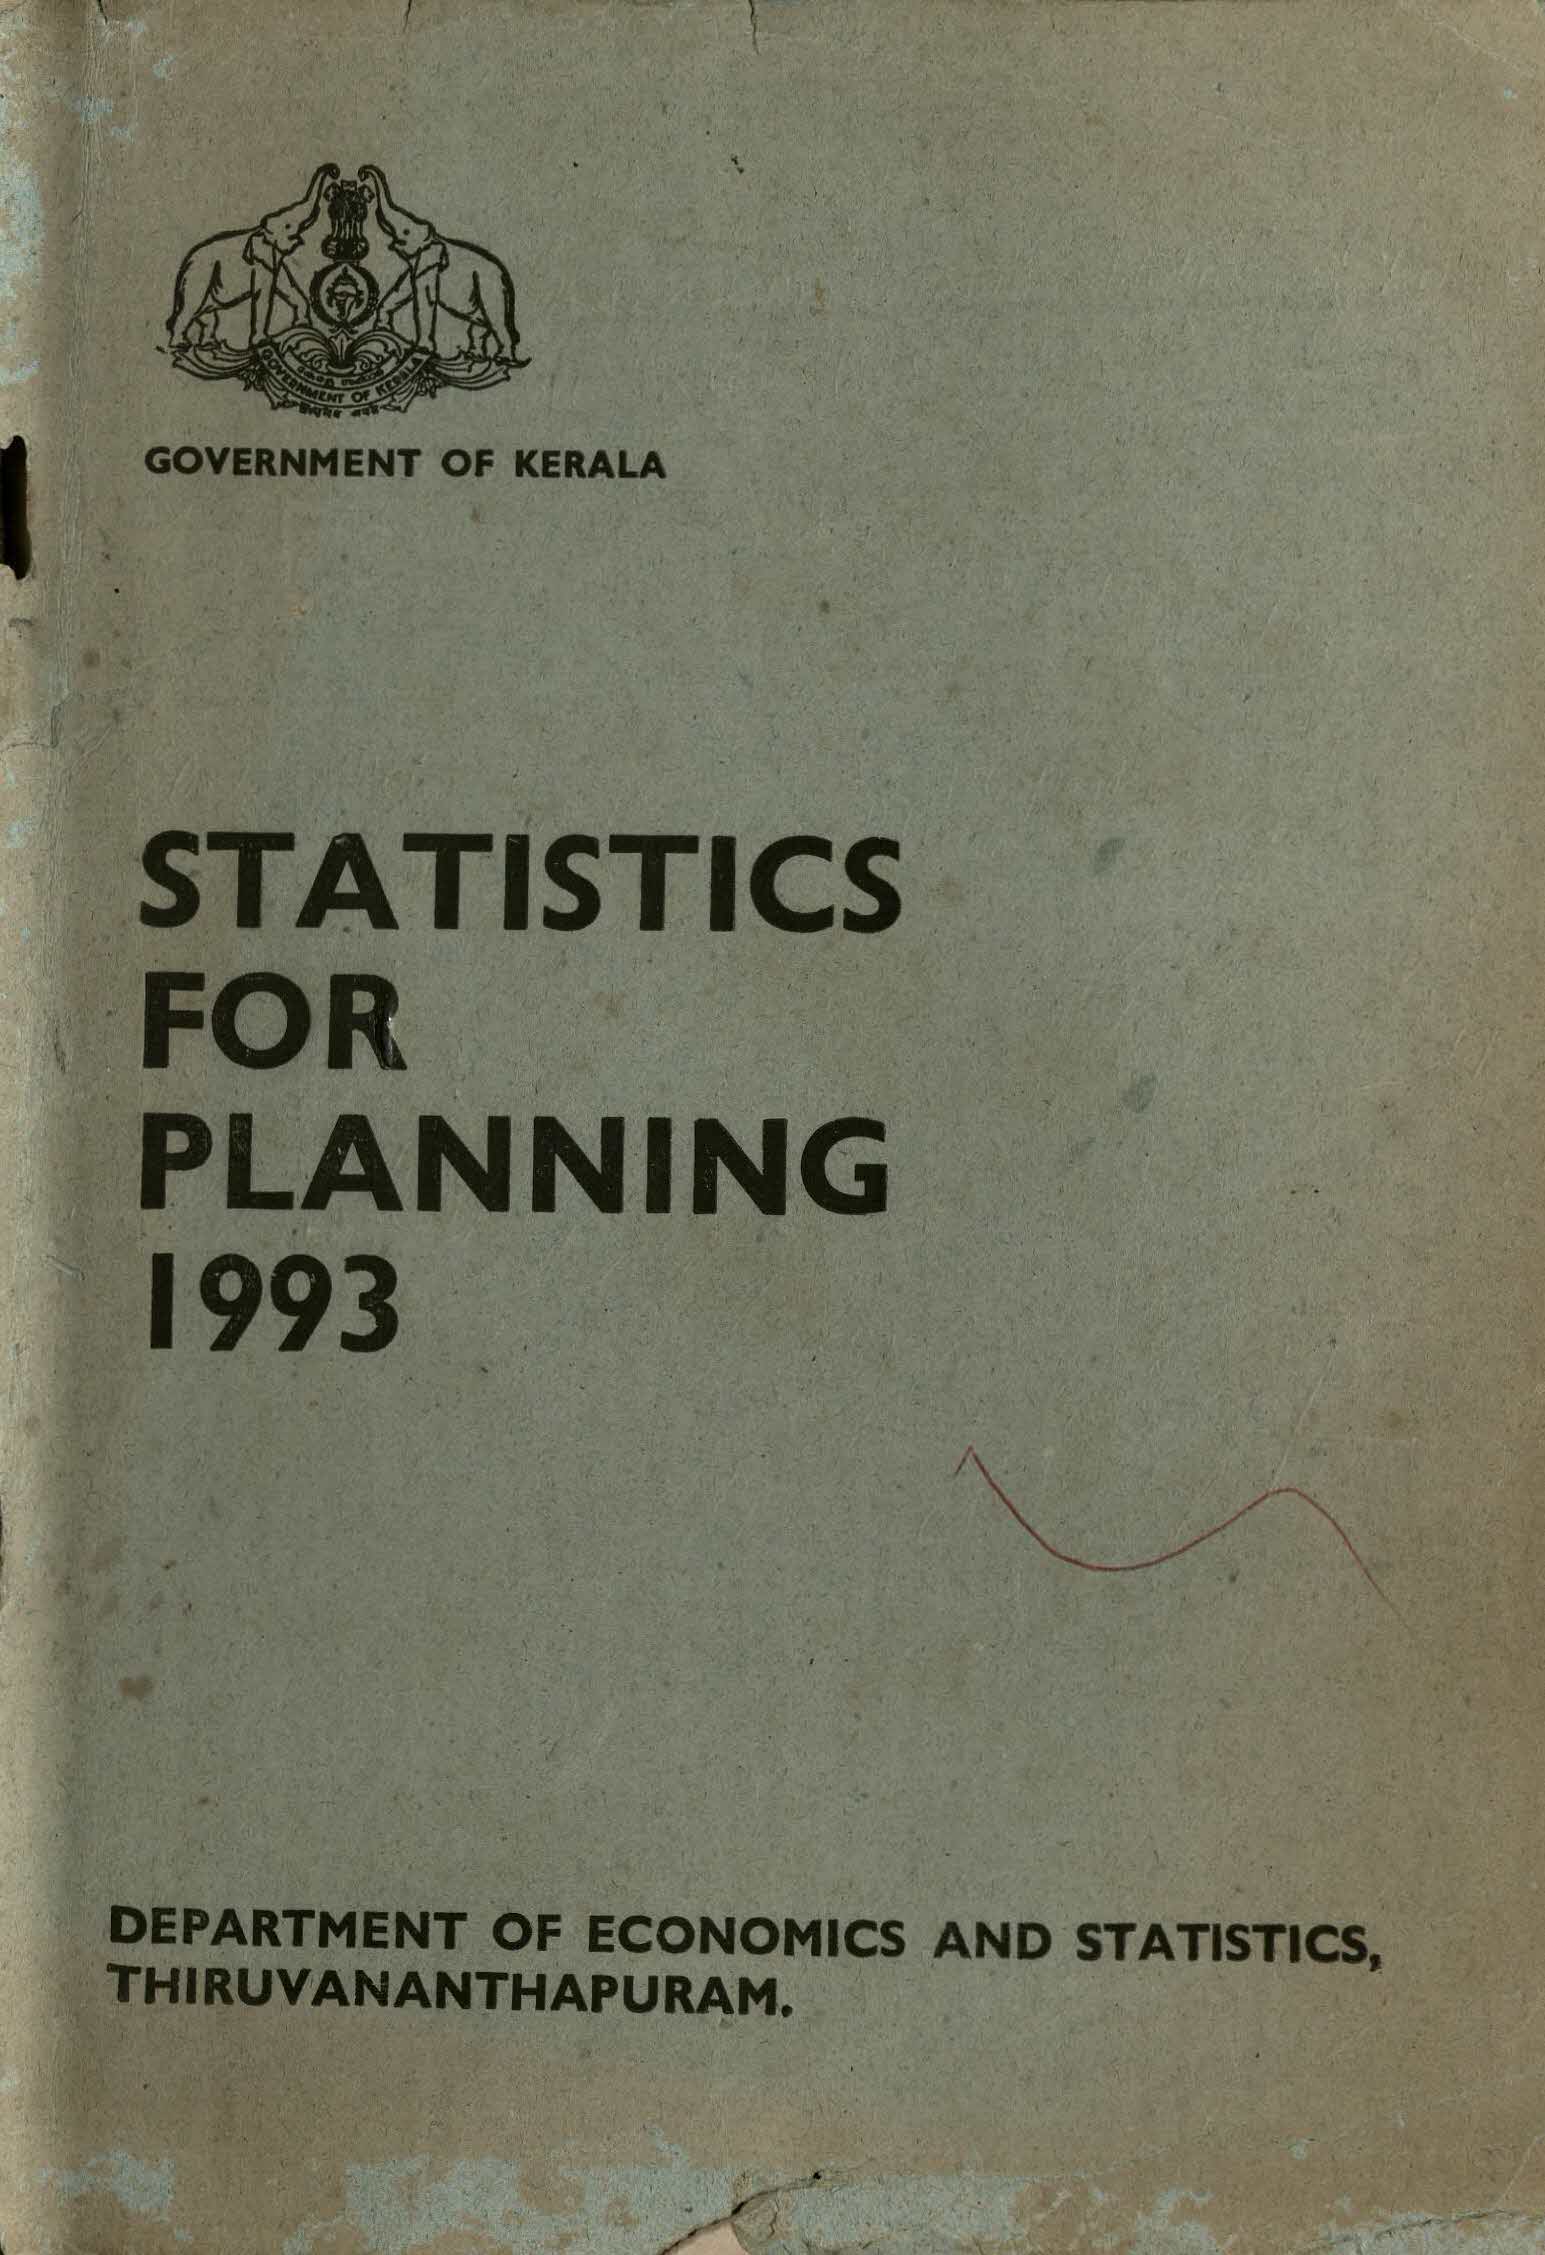 STATISTICS FOR PLANNING 1993